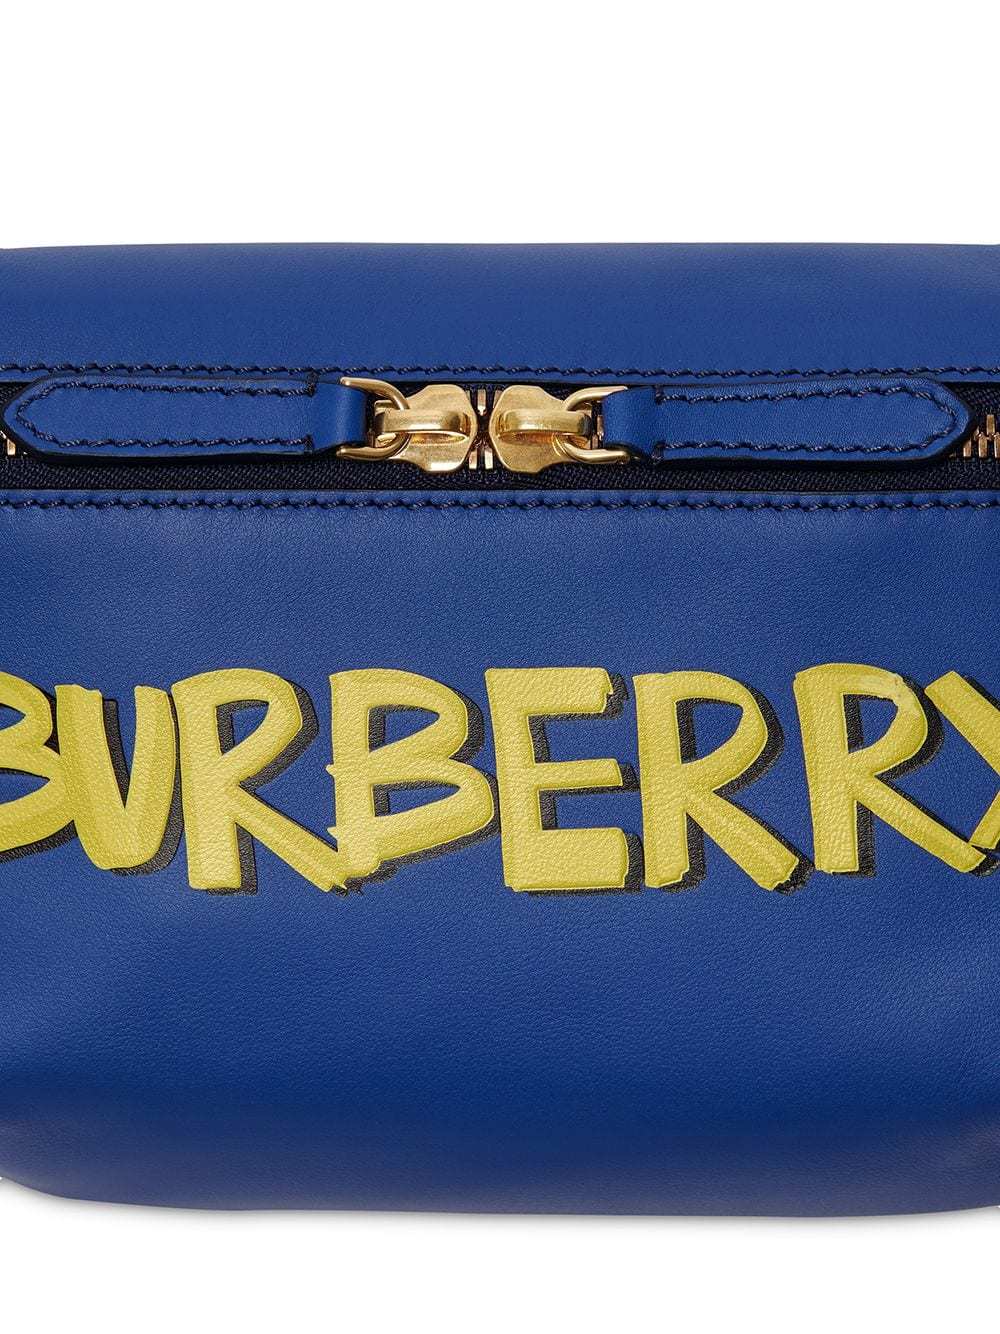 burberry graffiti bum bag